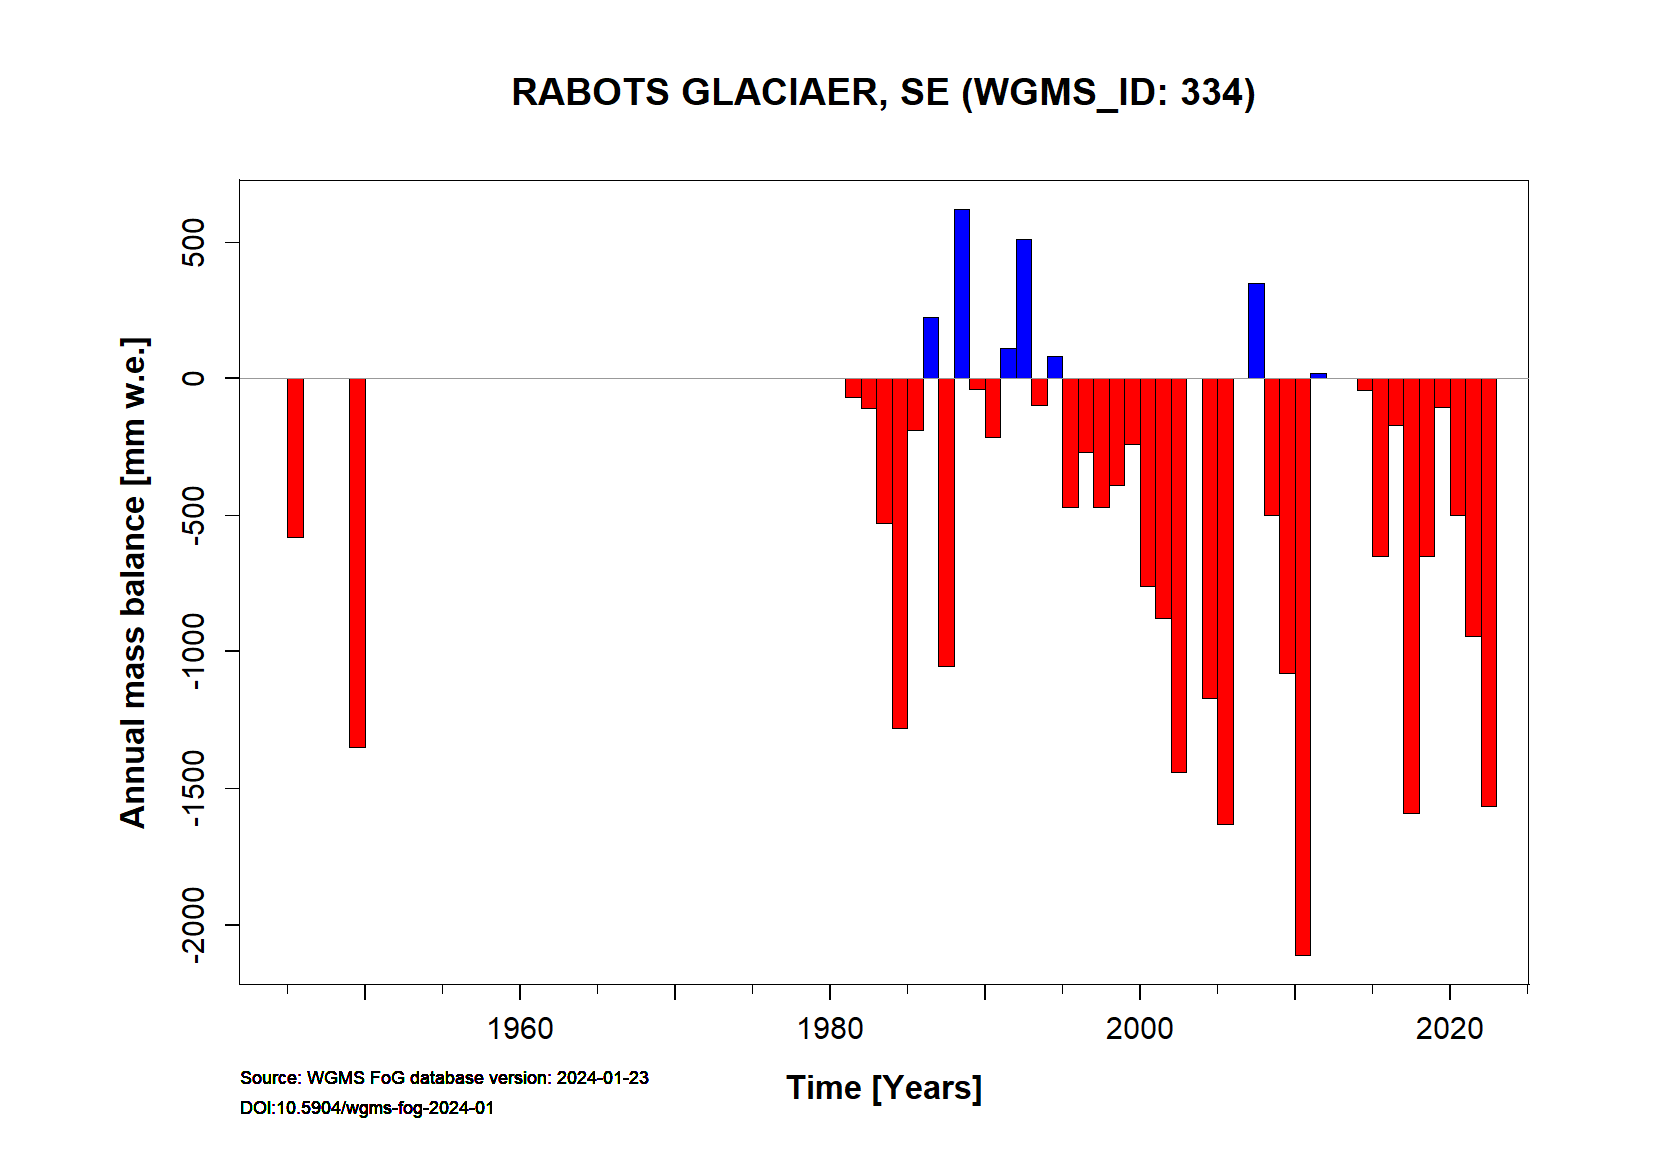 Rabots glaciär Annual Mass Balance (WGMS, 2018)